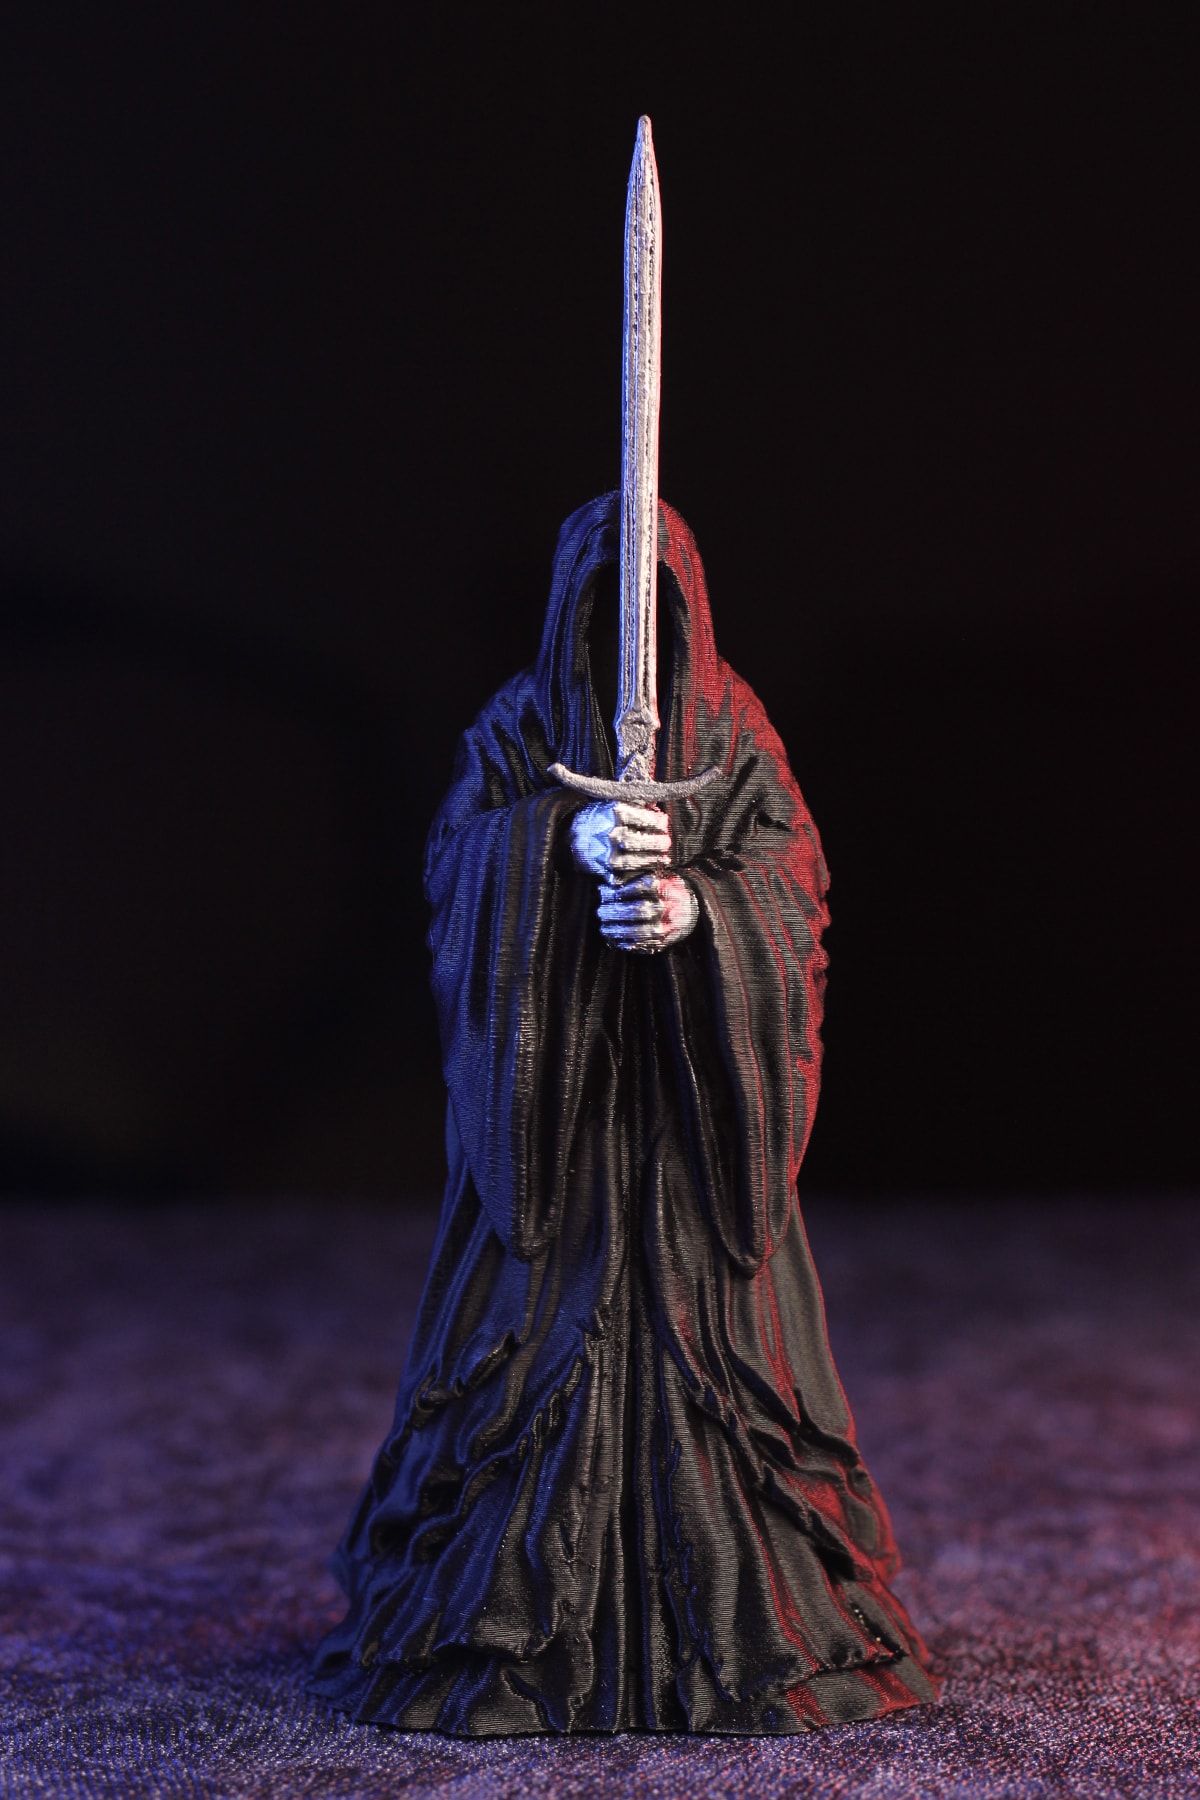 GÜRCÜ 3D Siyah Nazgul Yüzüklerin Efendisi - Lotr Lord Of The Rings Nazgul Heykel Figür 15 Cm